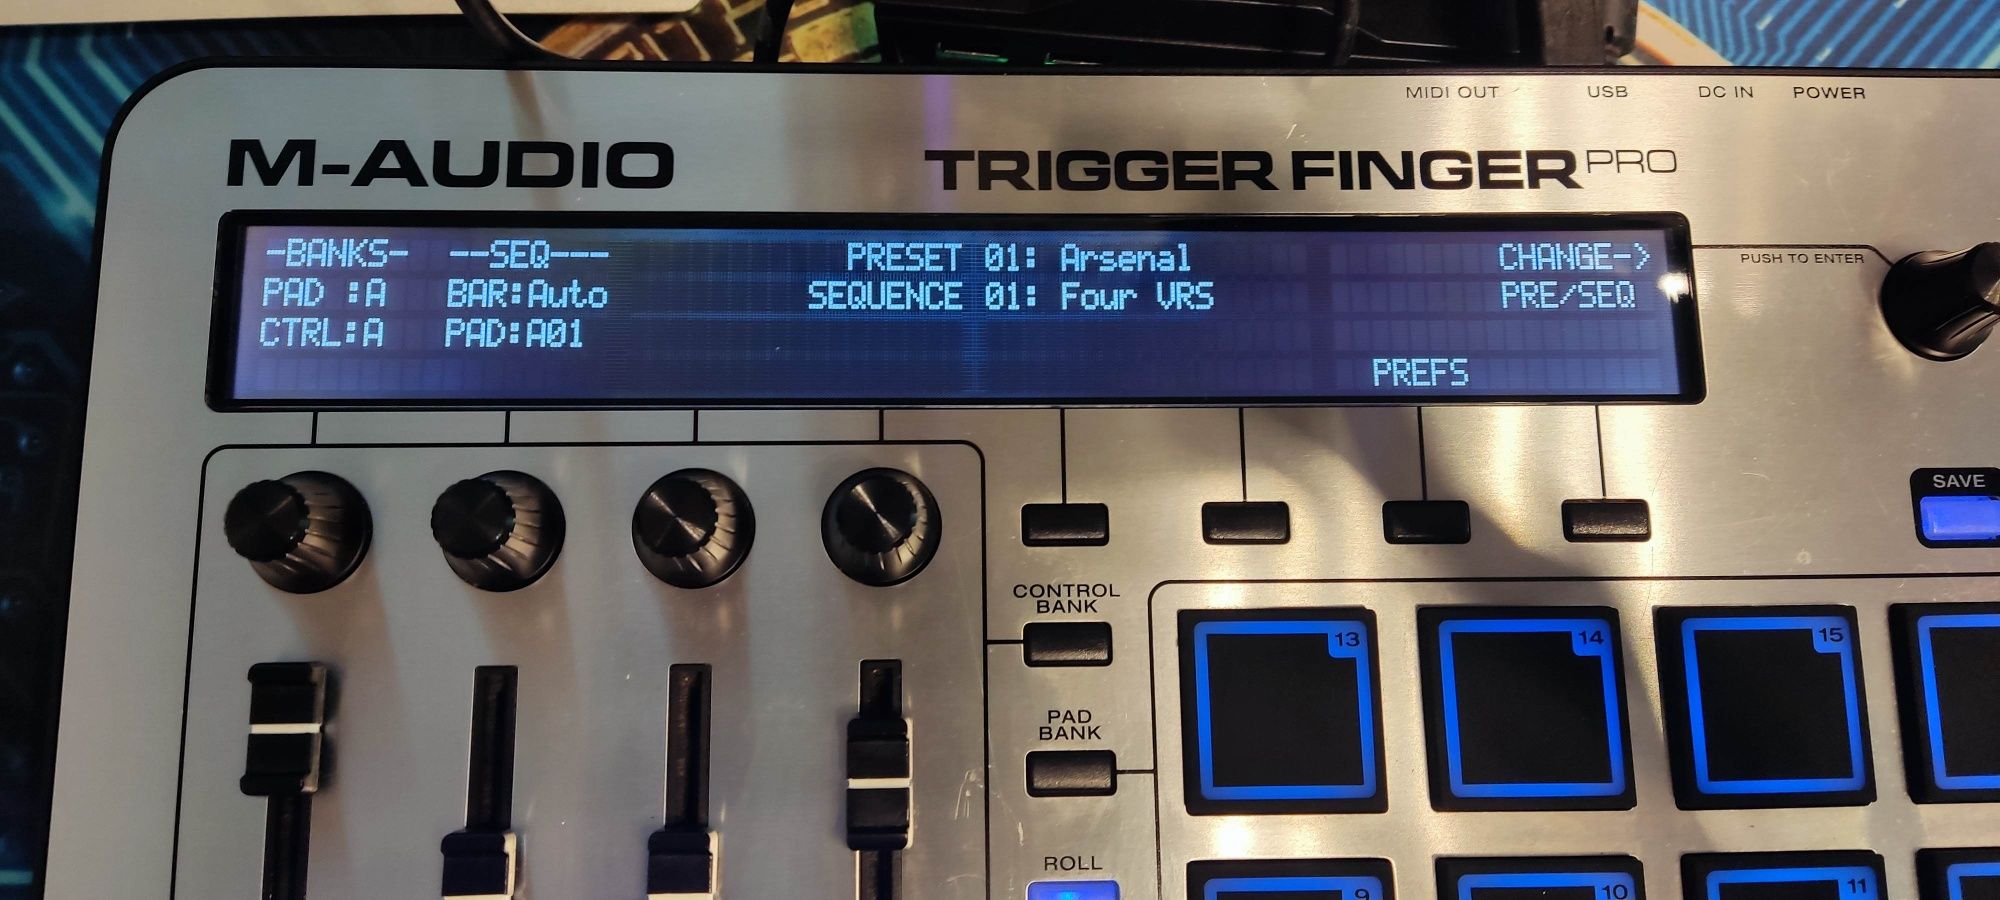 M-audio Trigger finger Pro MIDI